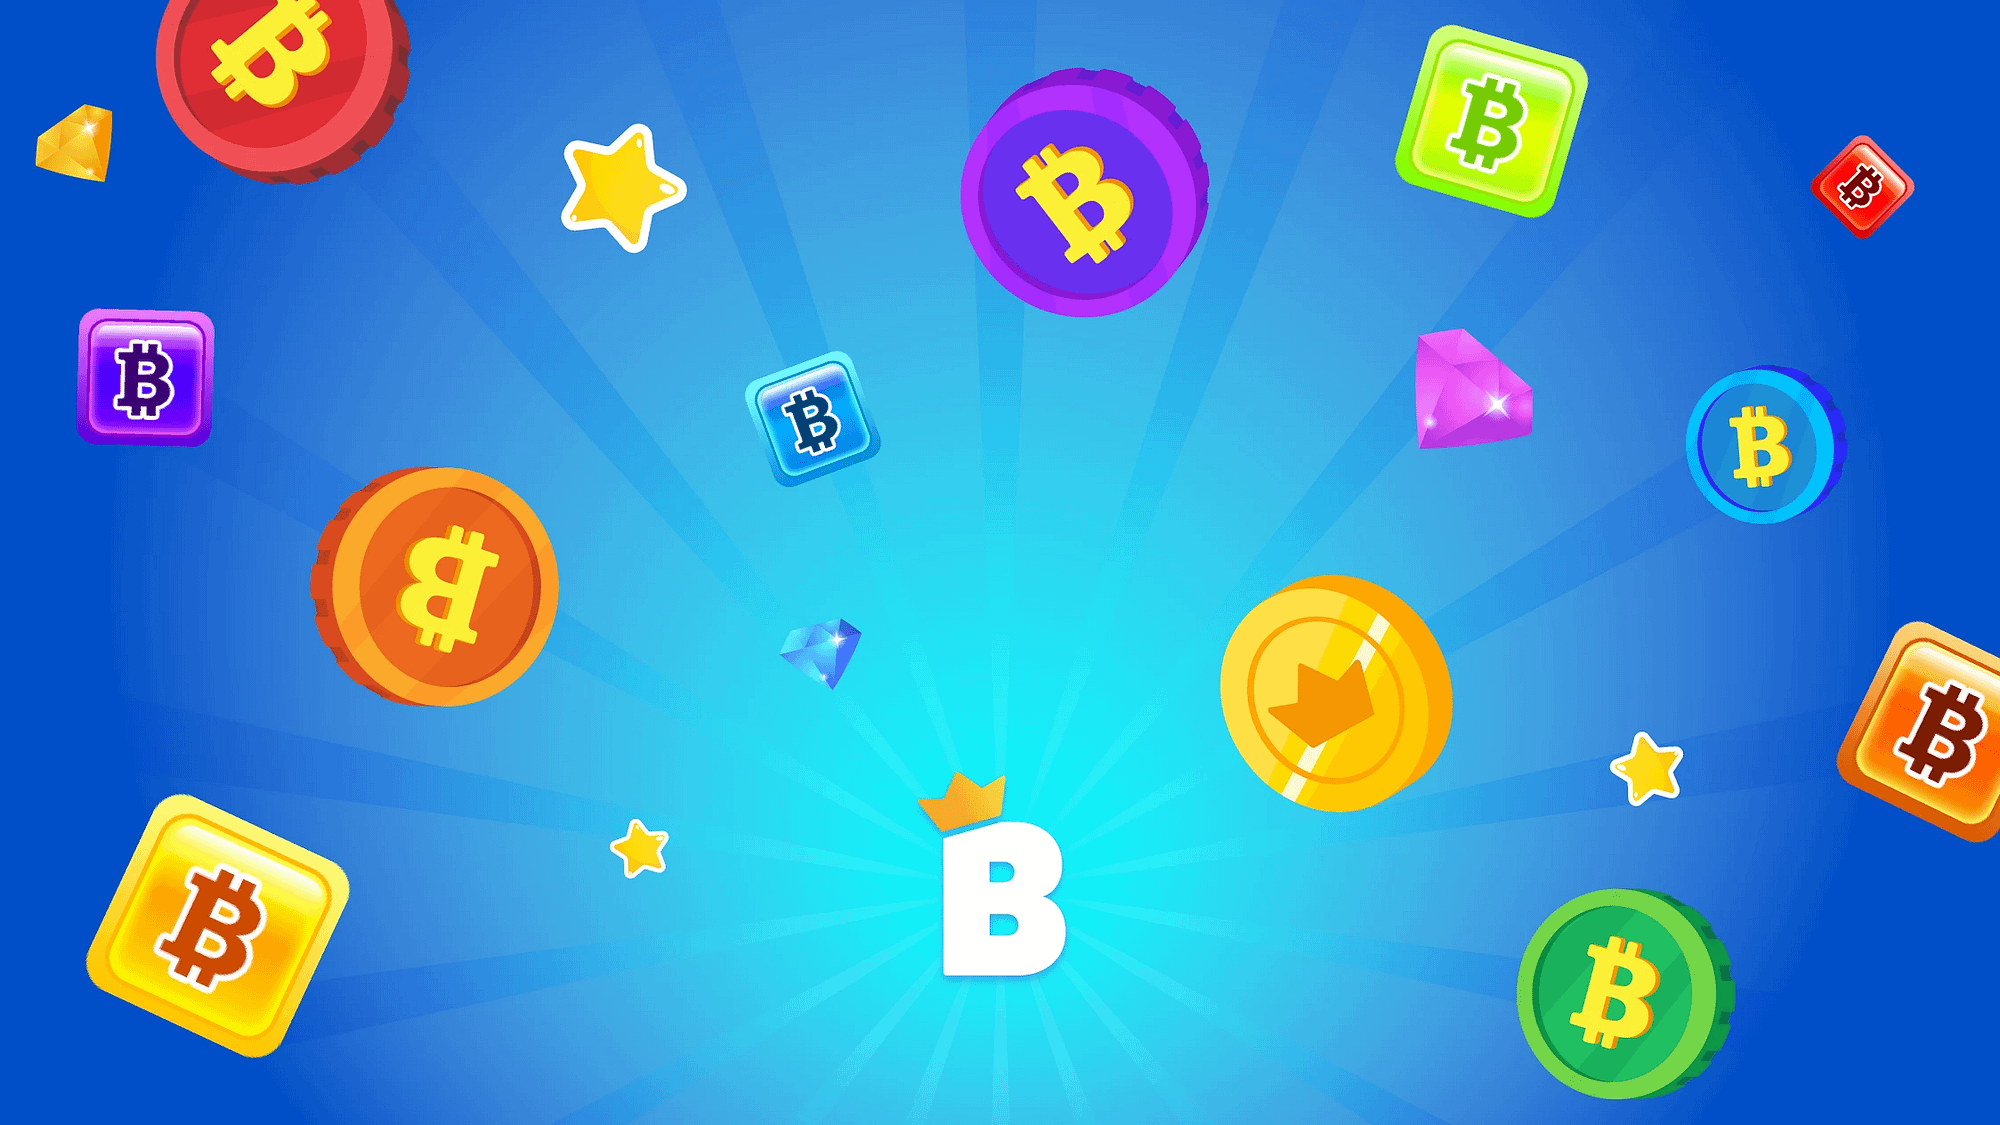 Play Bitcoin Blocks and Win Free Bitcoin!